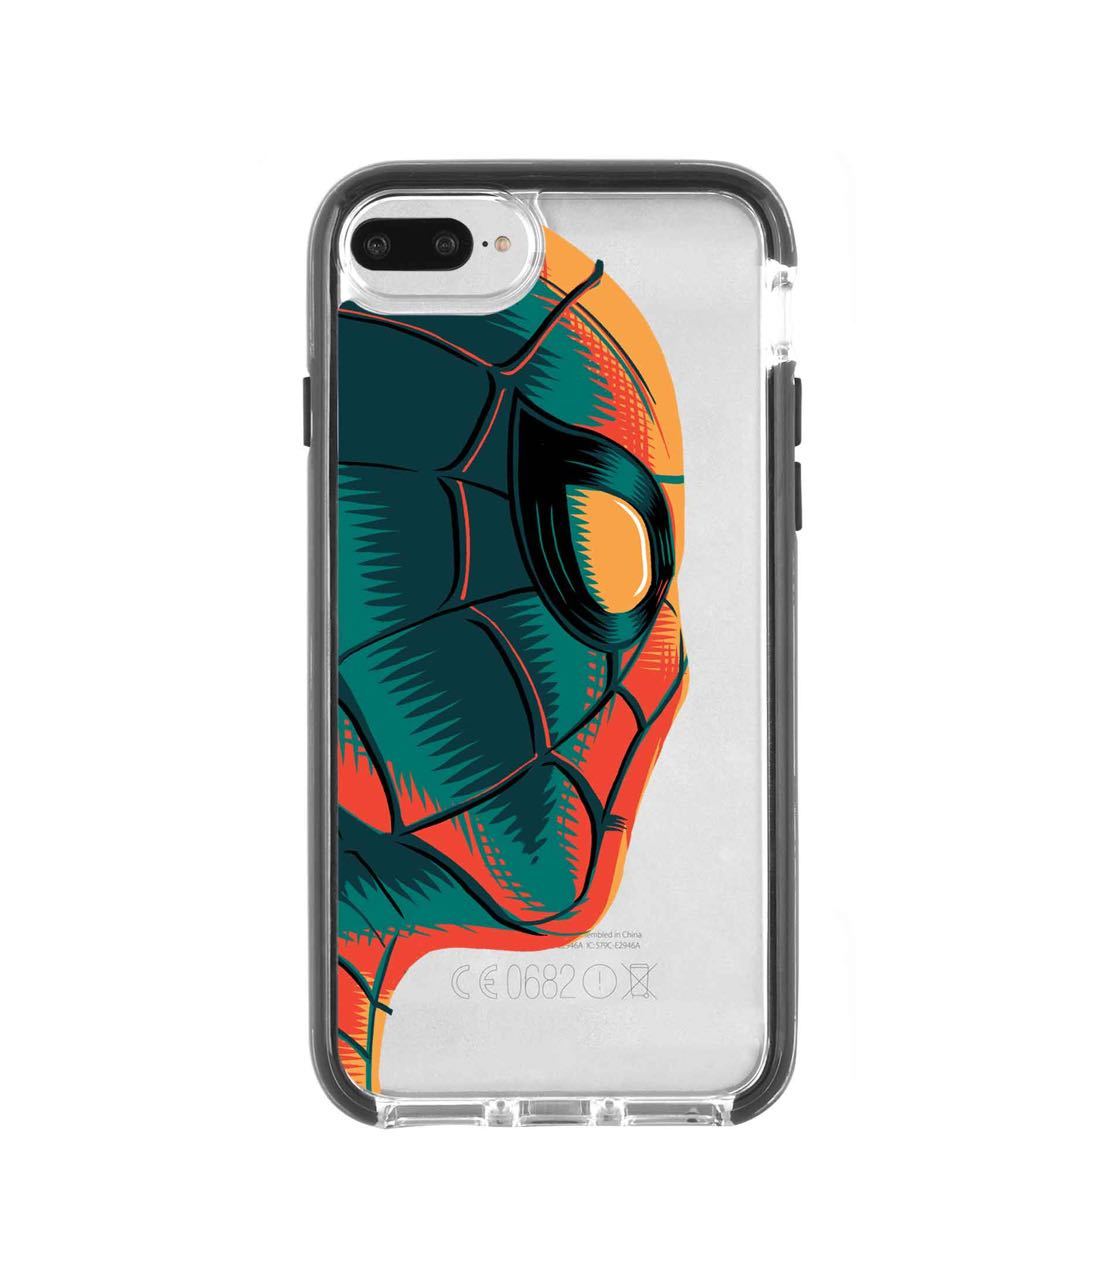 Illuminated Spiderman - Extreme Phone Case for iPhone 8 Plus